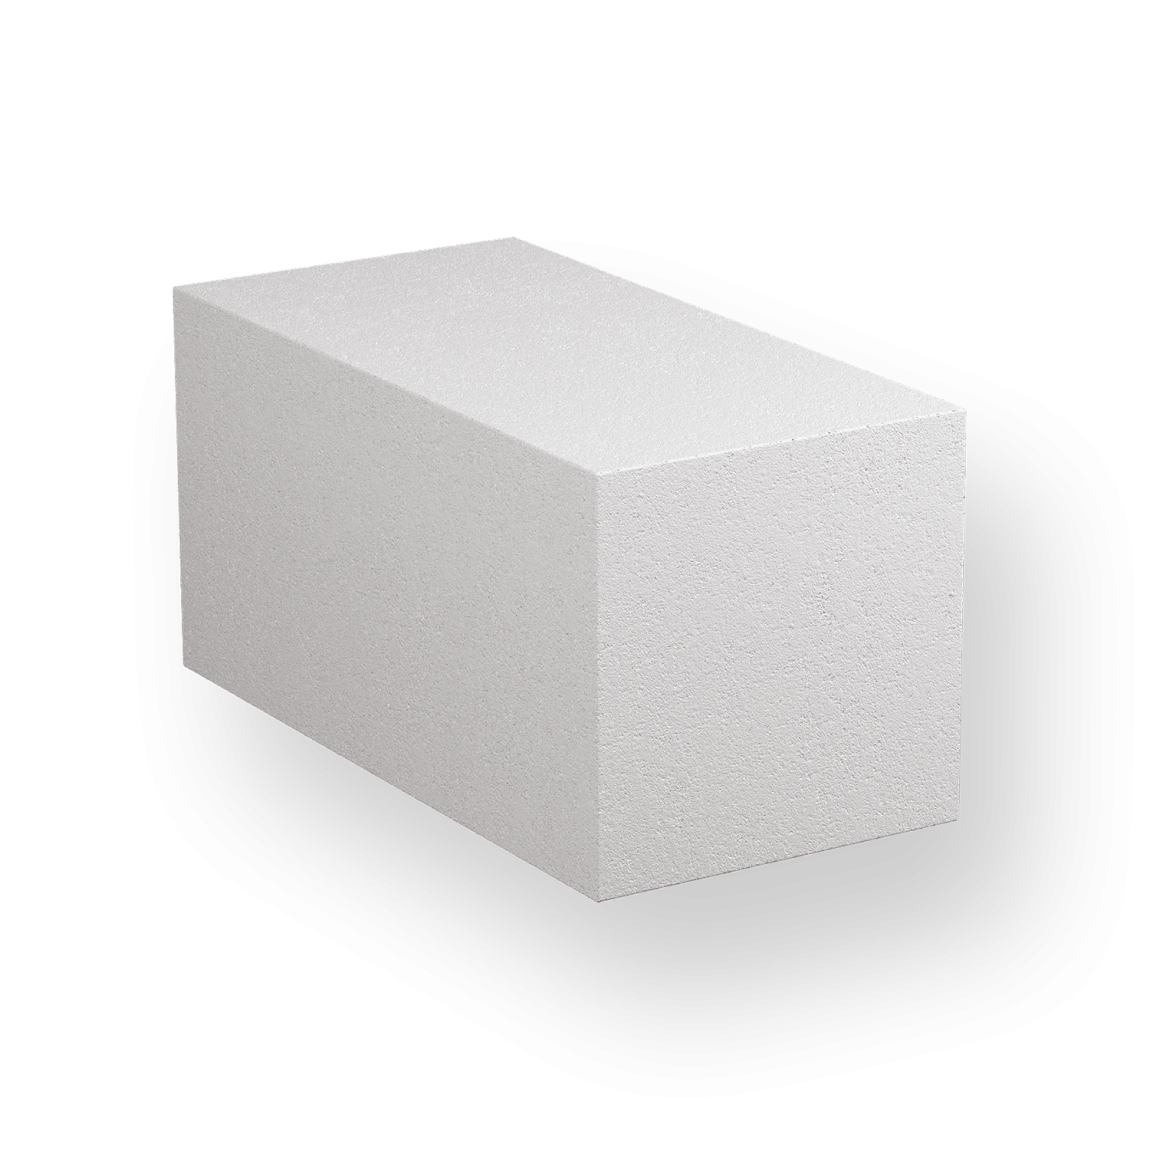 PORFIX tvárnice 250x250x500mm hladká P2-440 písková (48) - Hrubá stavba zdící materiály porobetonové a vápenopískové zdící materiály porfix